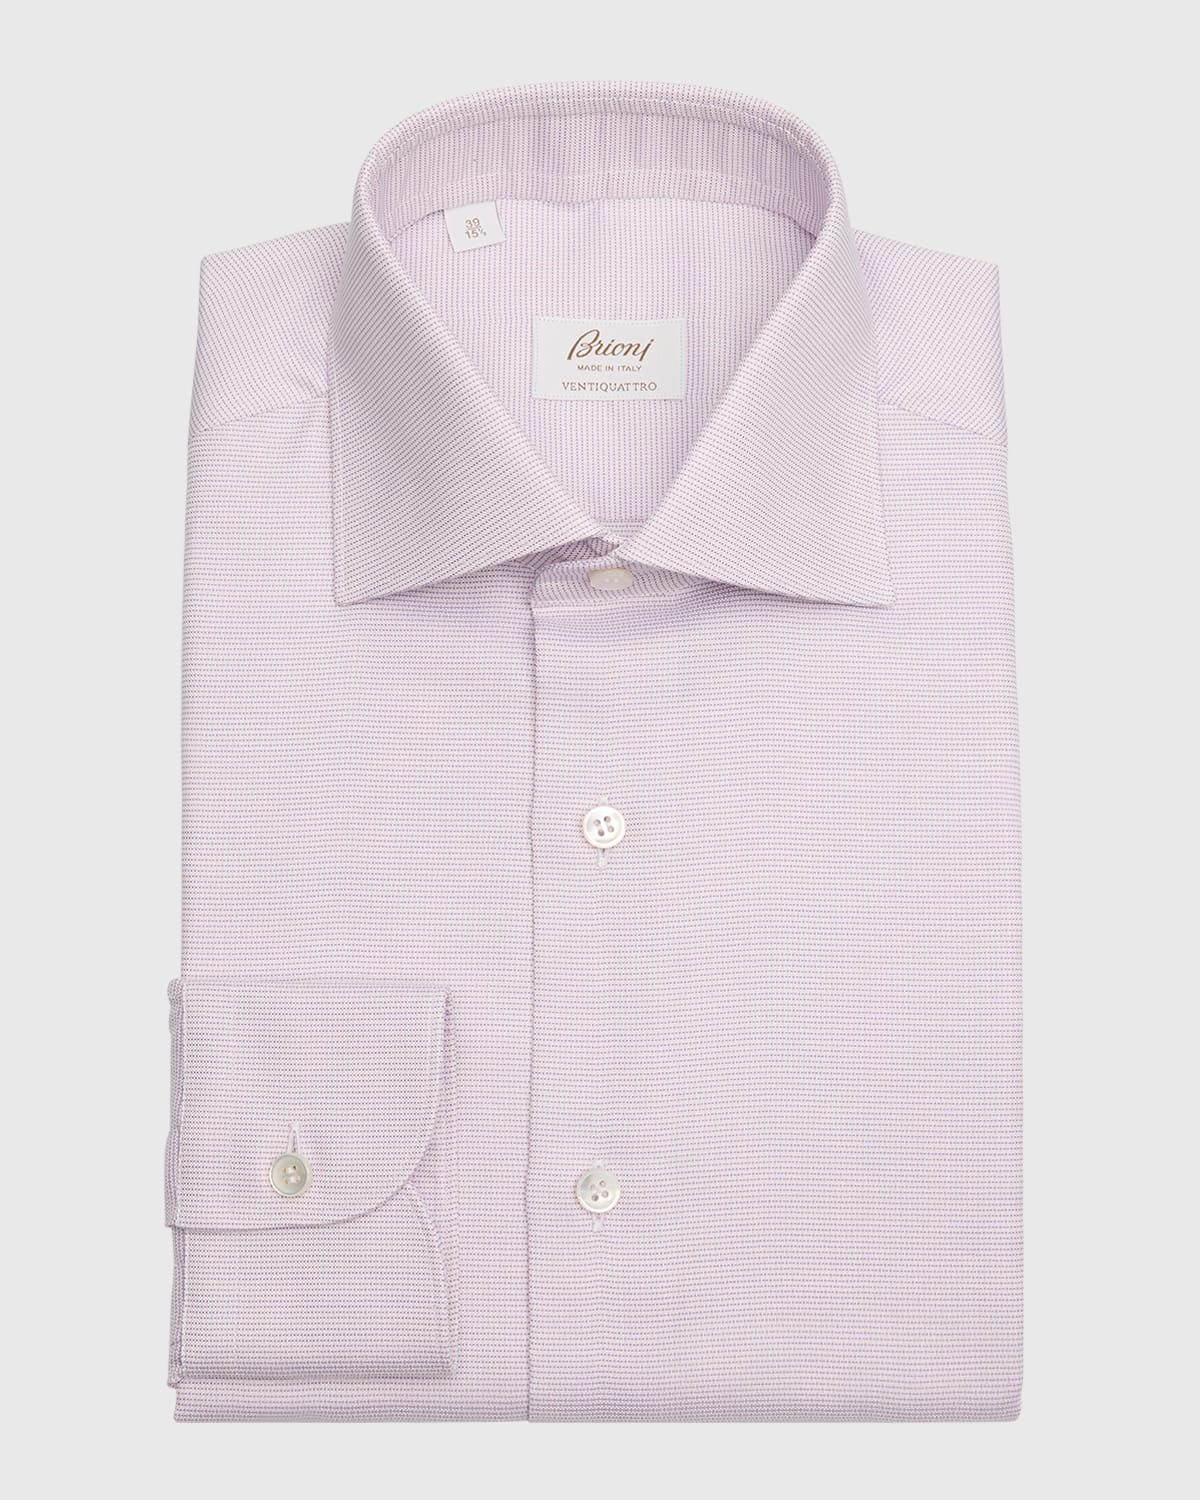 Shop Brioni Men's Ventiquattro Cotton Dress Shirt In White Pink